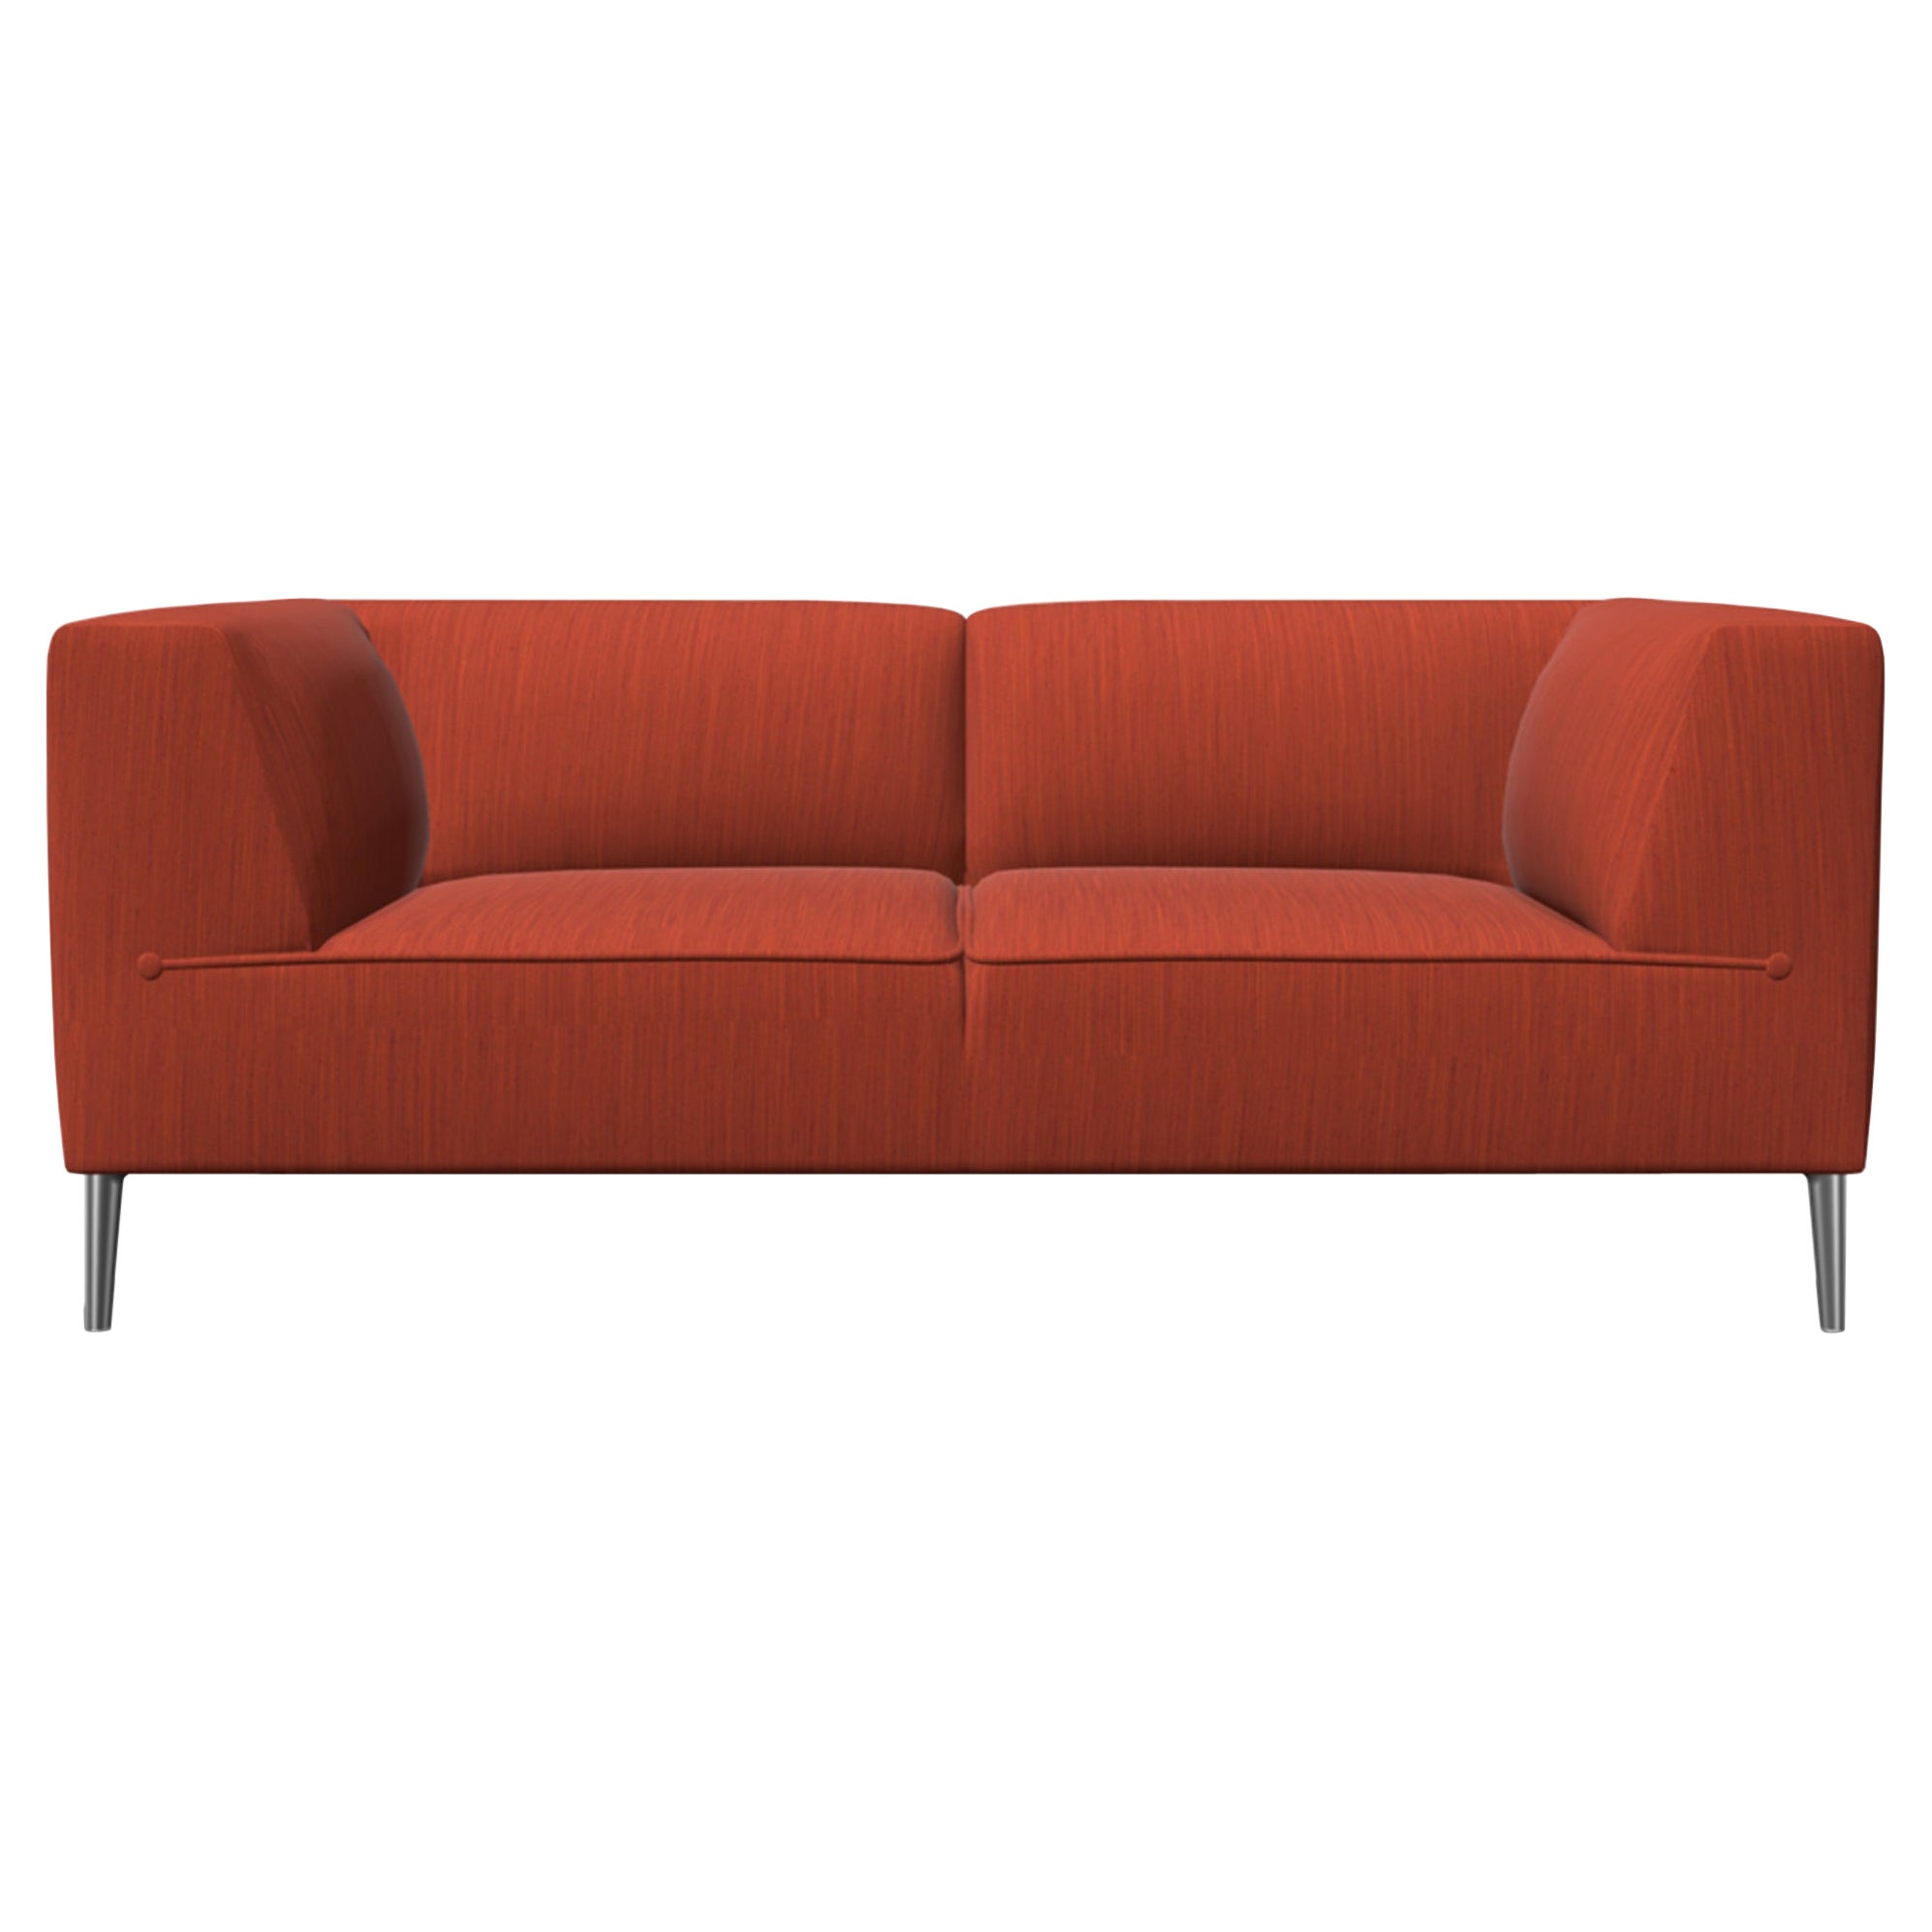 Moooi Double Seat Sofa So Good in Flamboyant Upholstery & Polished Aluminum Feet For Sale